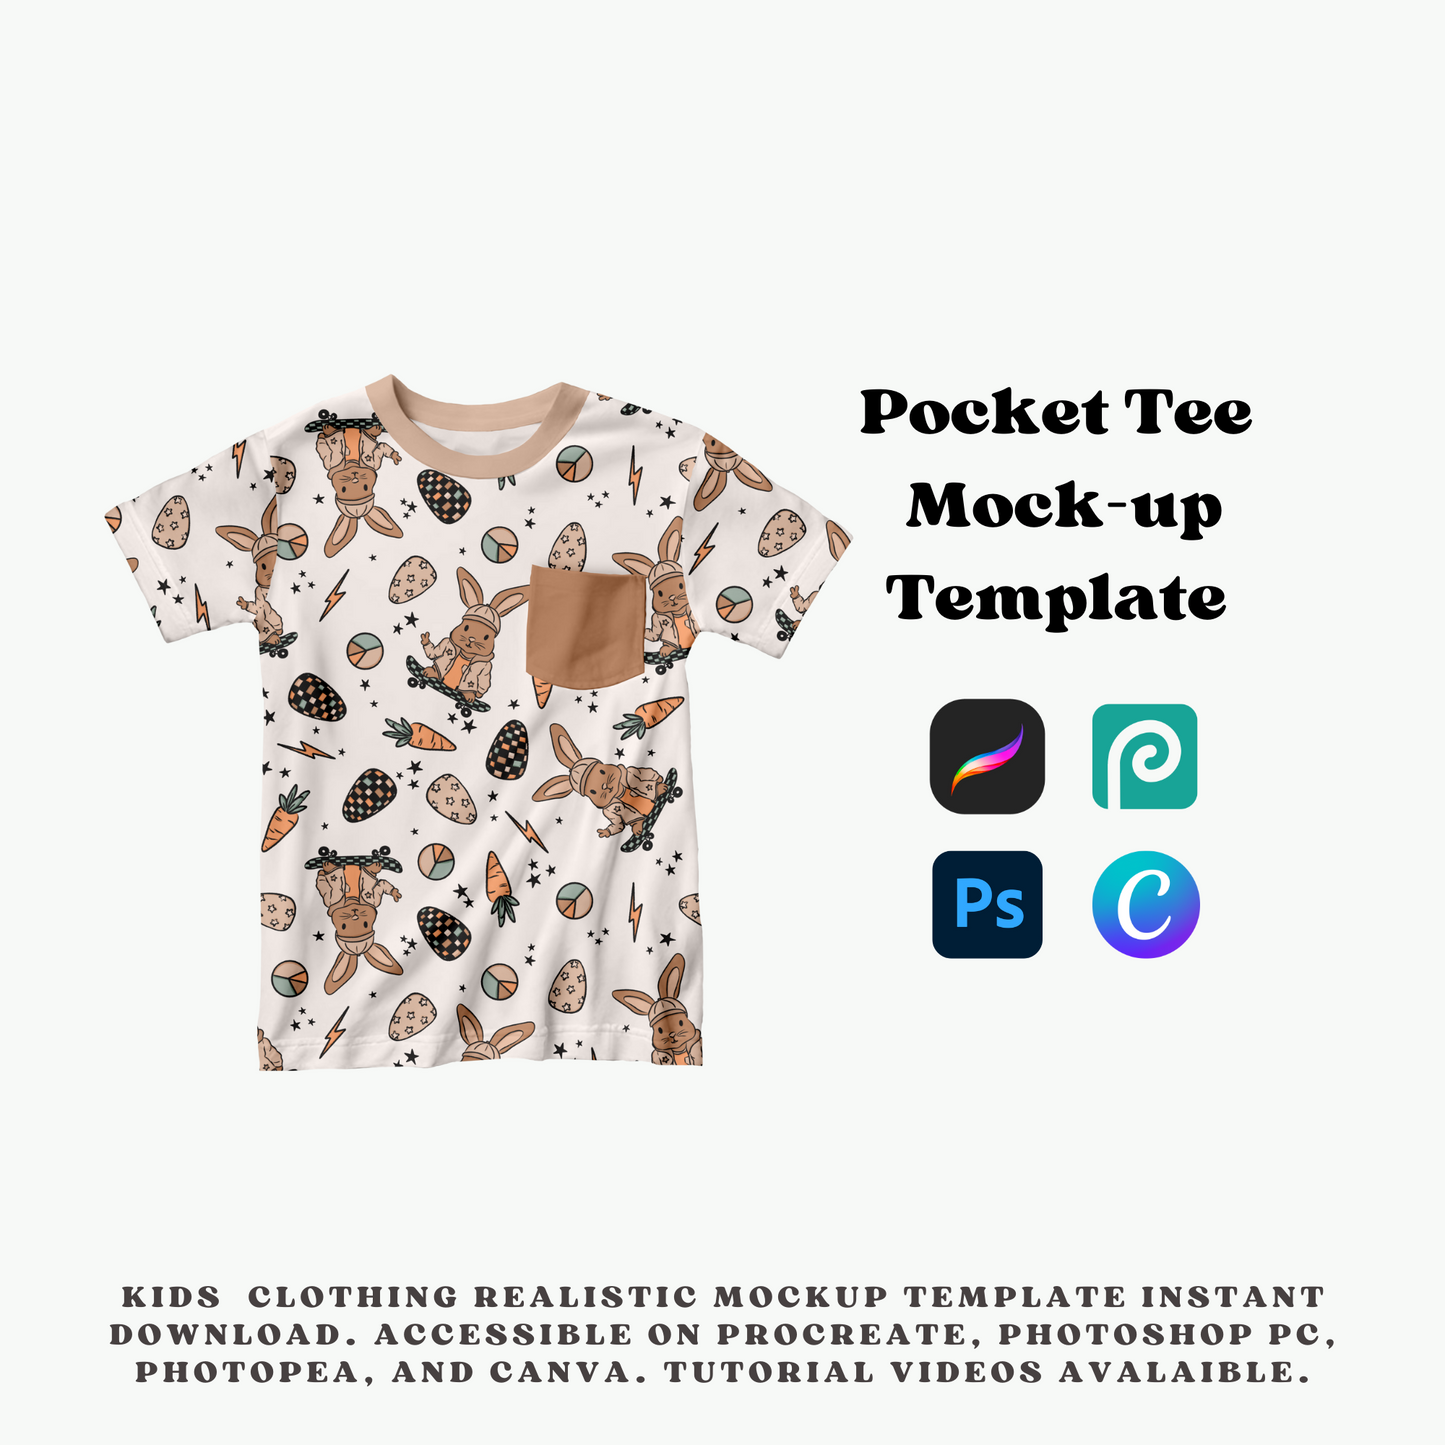 Pocket Tee Mock-up Template